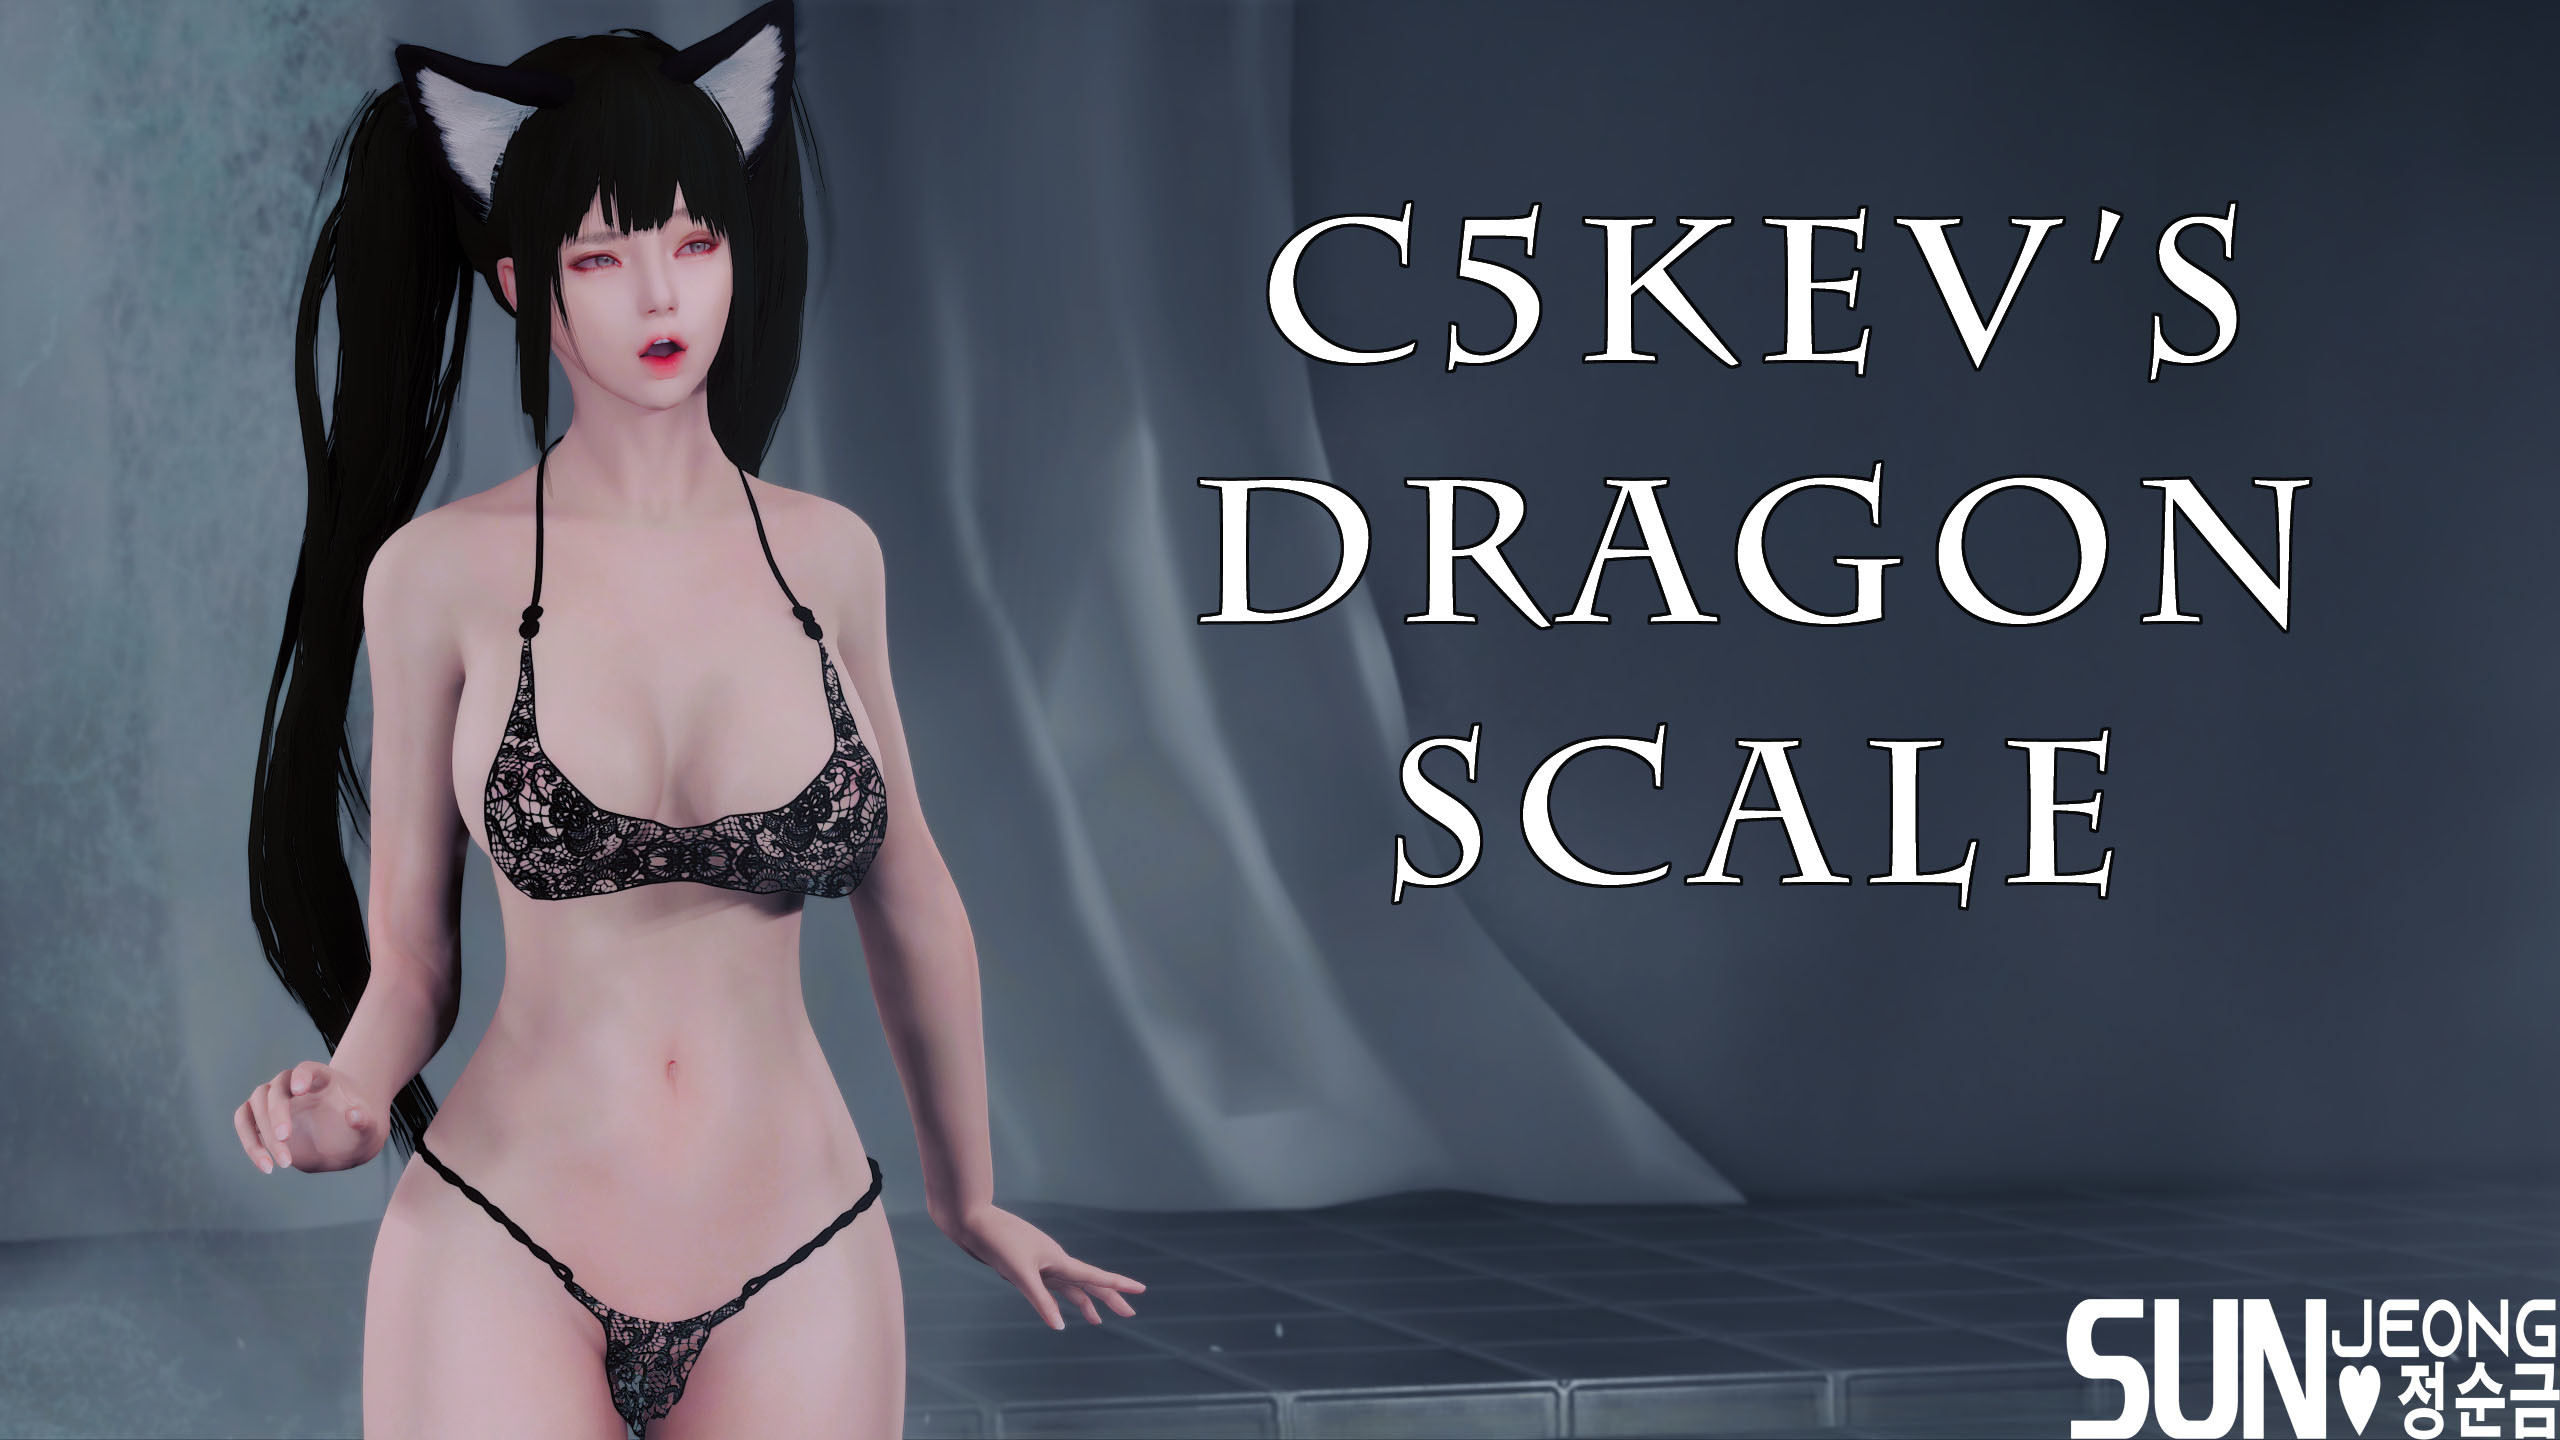 C5Kev's Dragonscale!